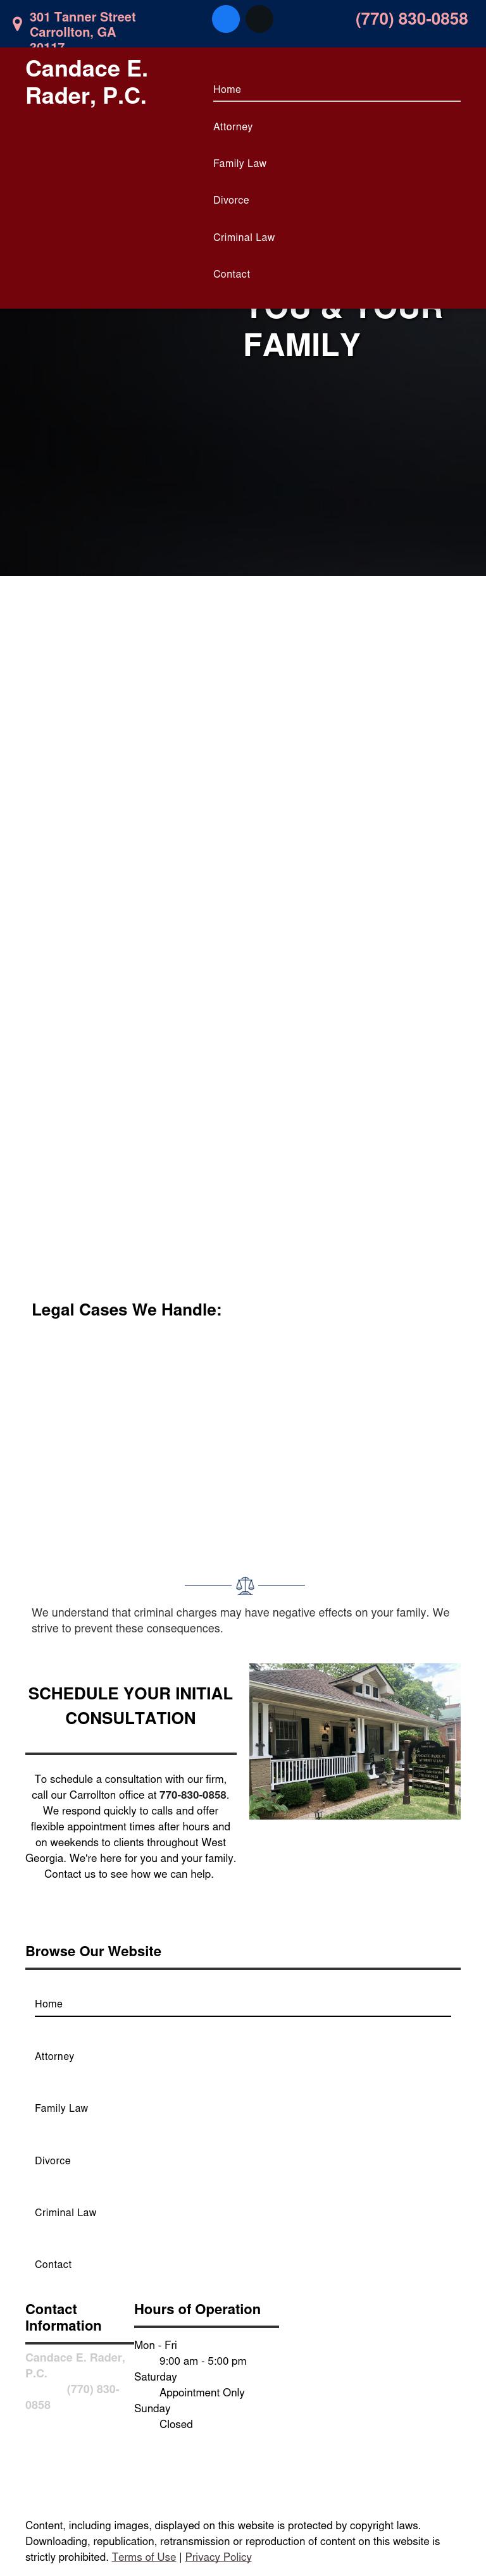 Candace E. Rader, P.C. - Carrollton GA Lawyers